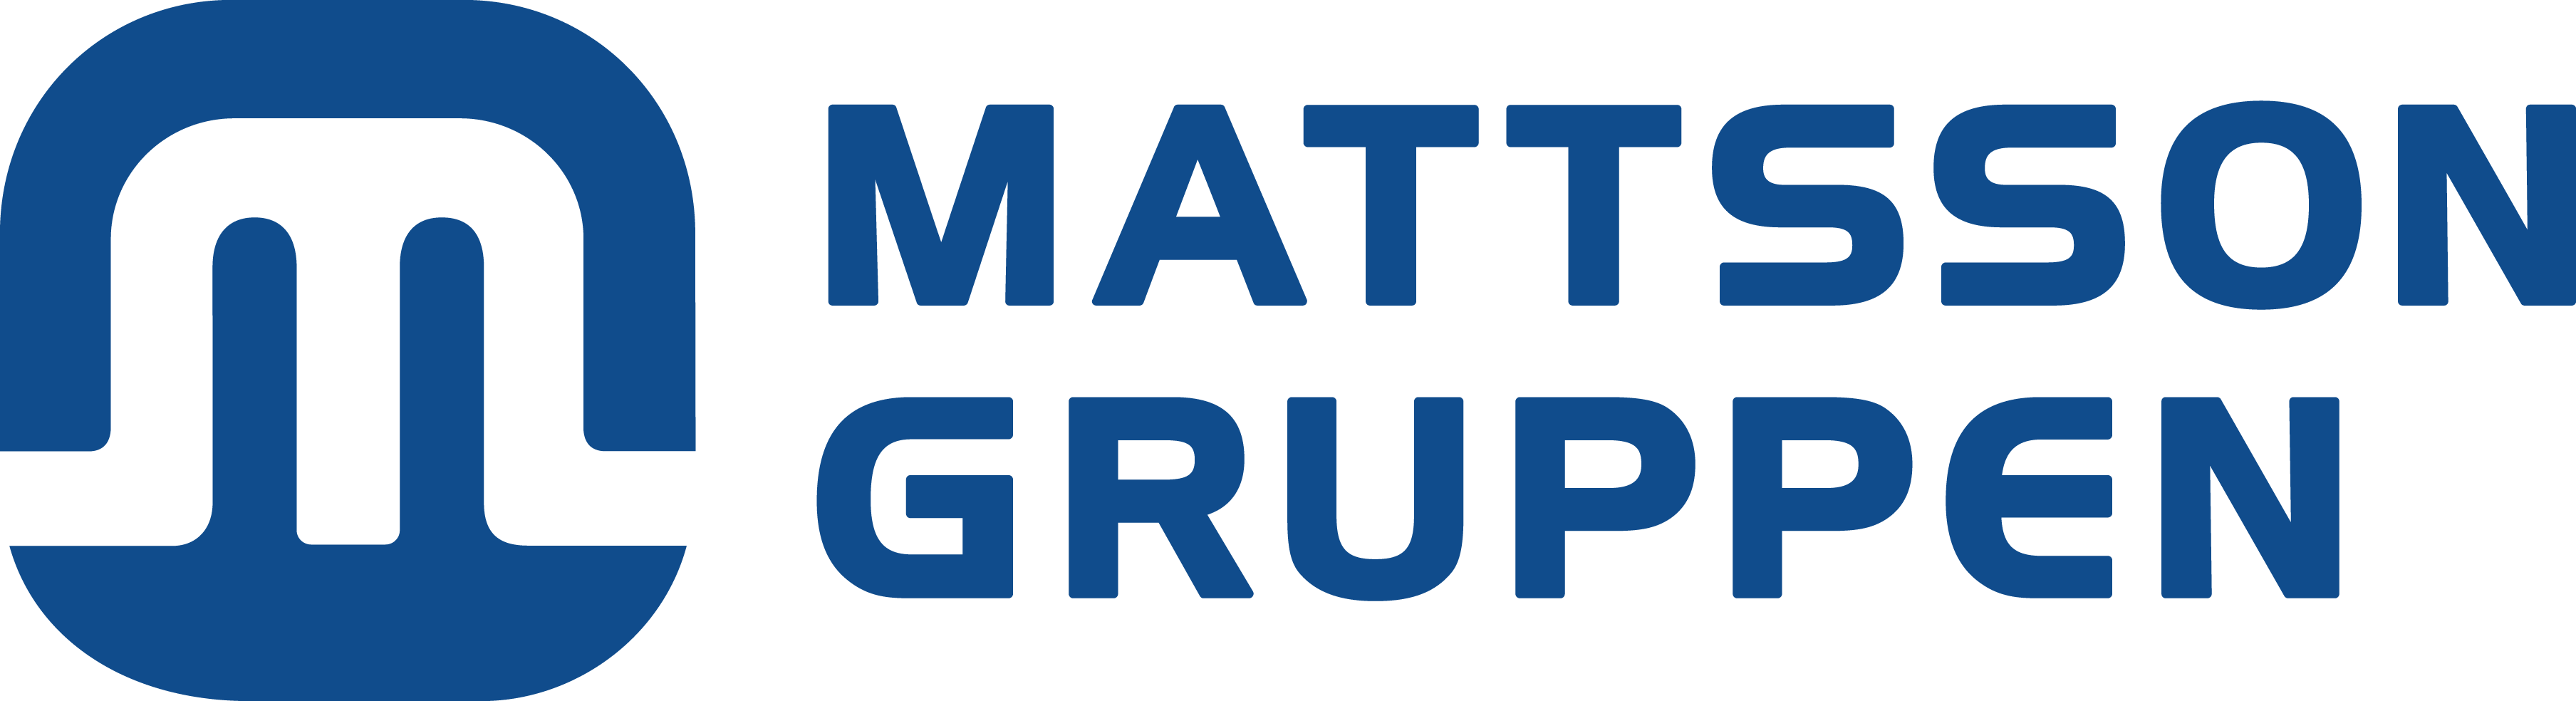 Mattsson Gruppen - partner till Mathivation